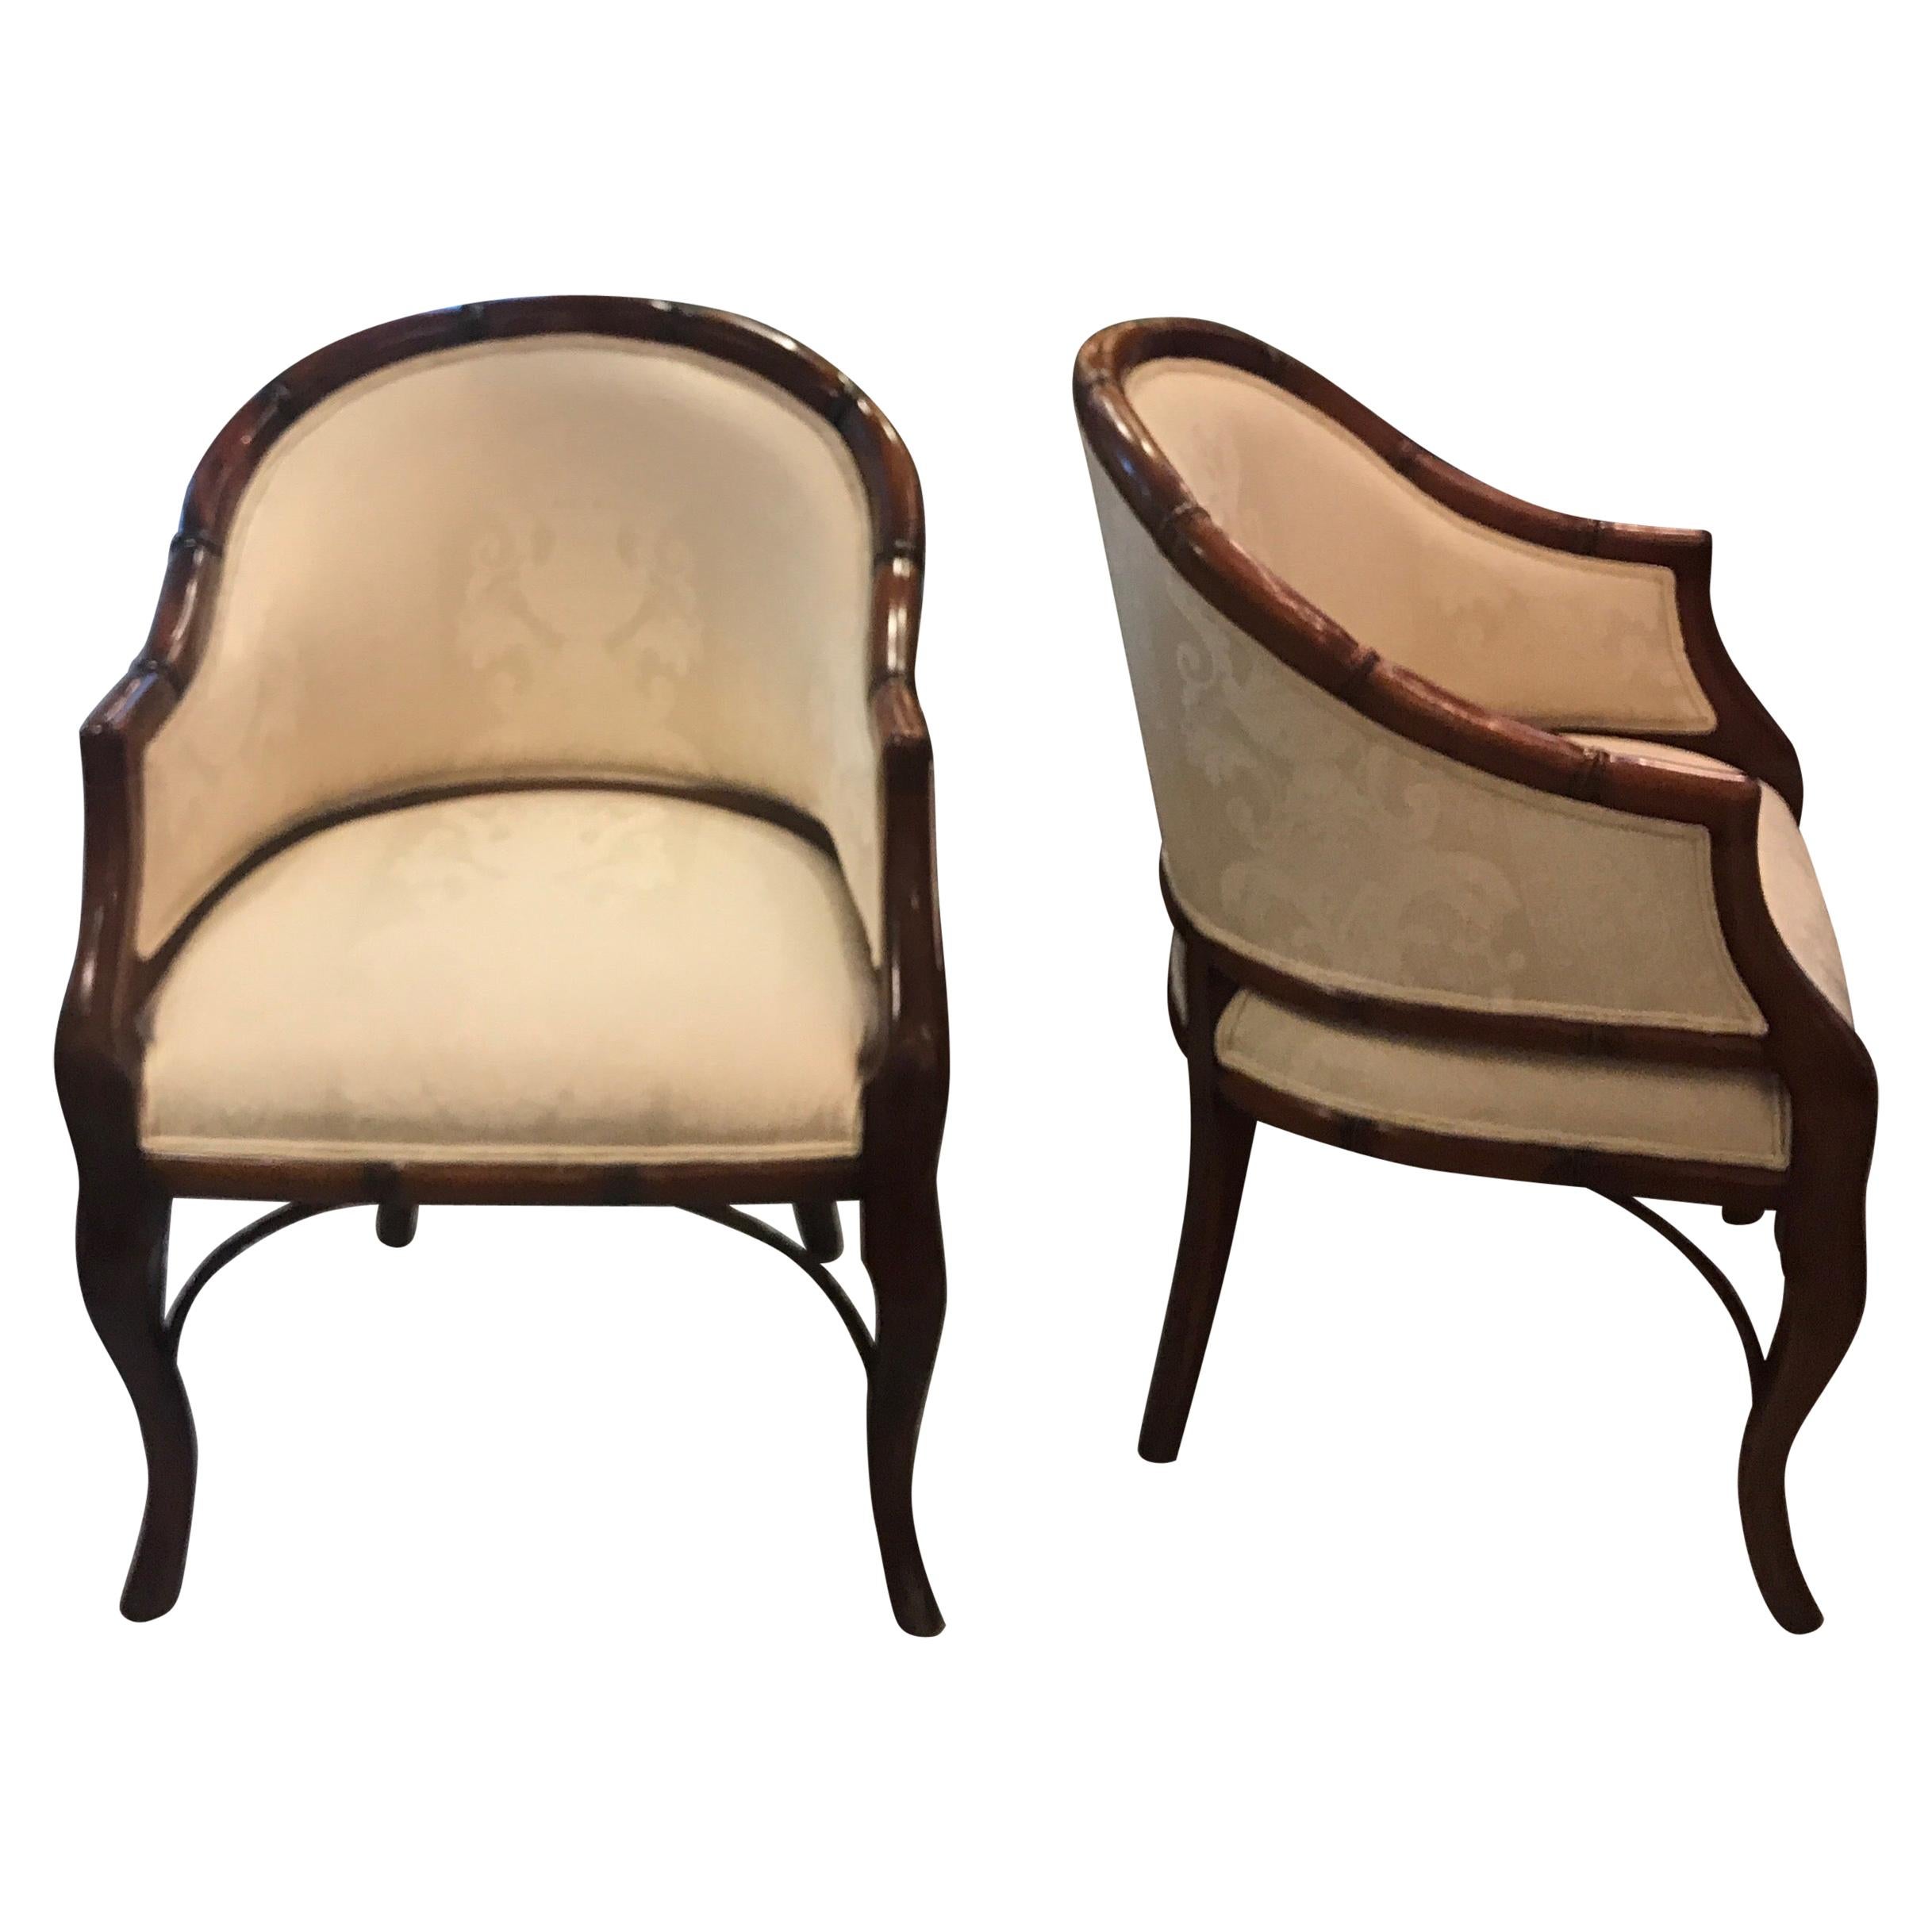 Pair of Hollywood Regency Tub Chairs